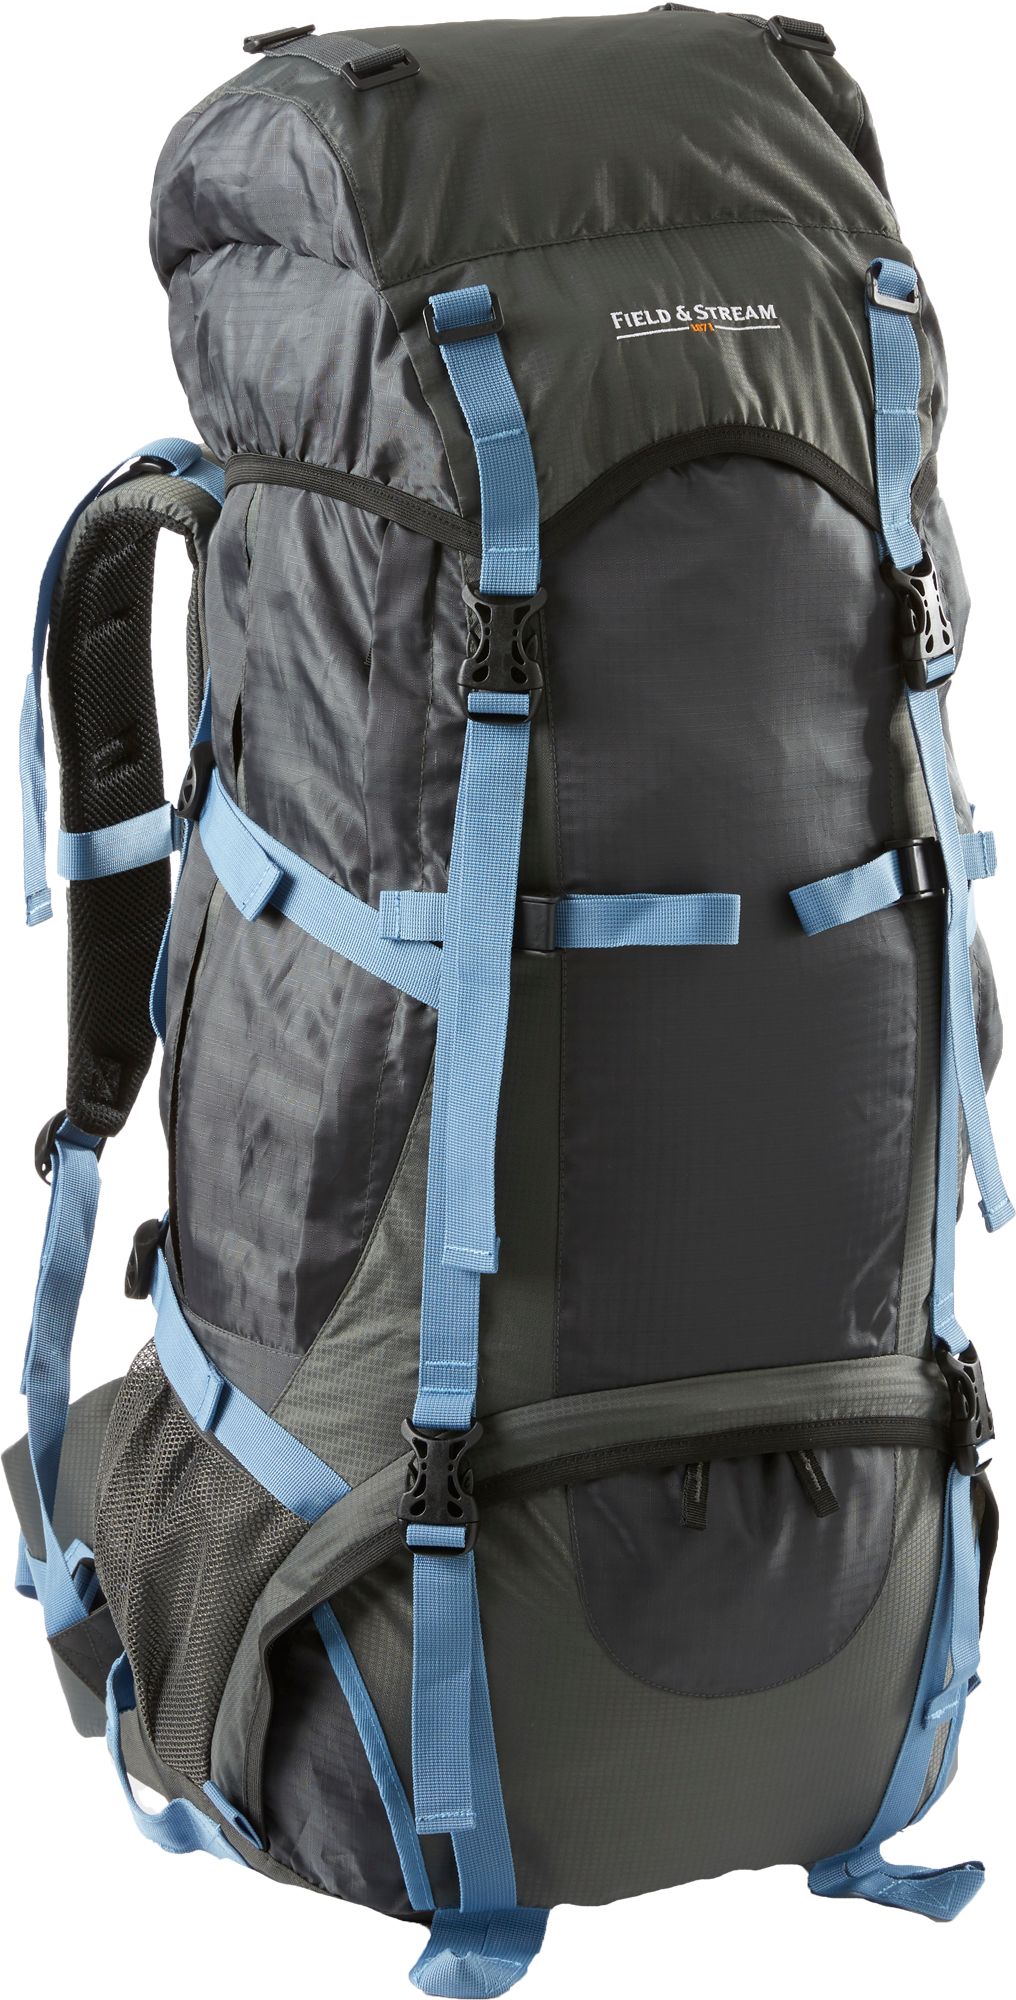 mountain hiking backpack